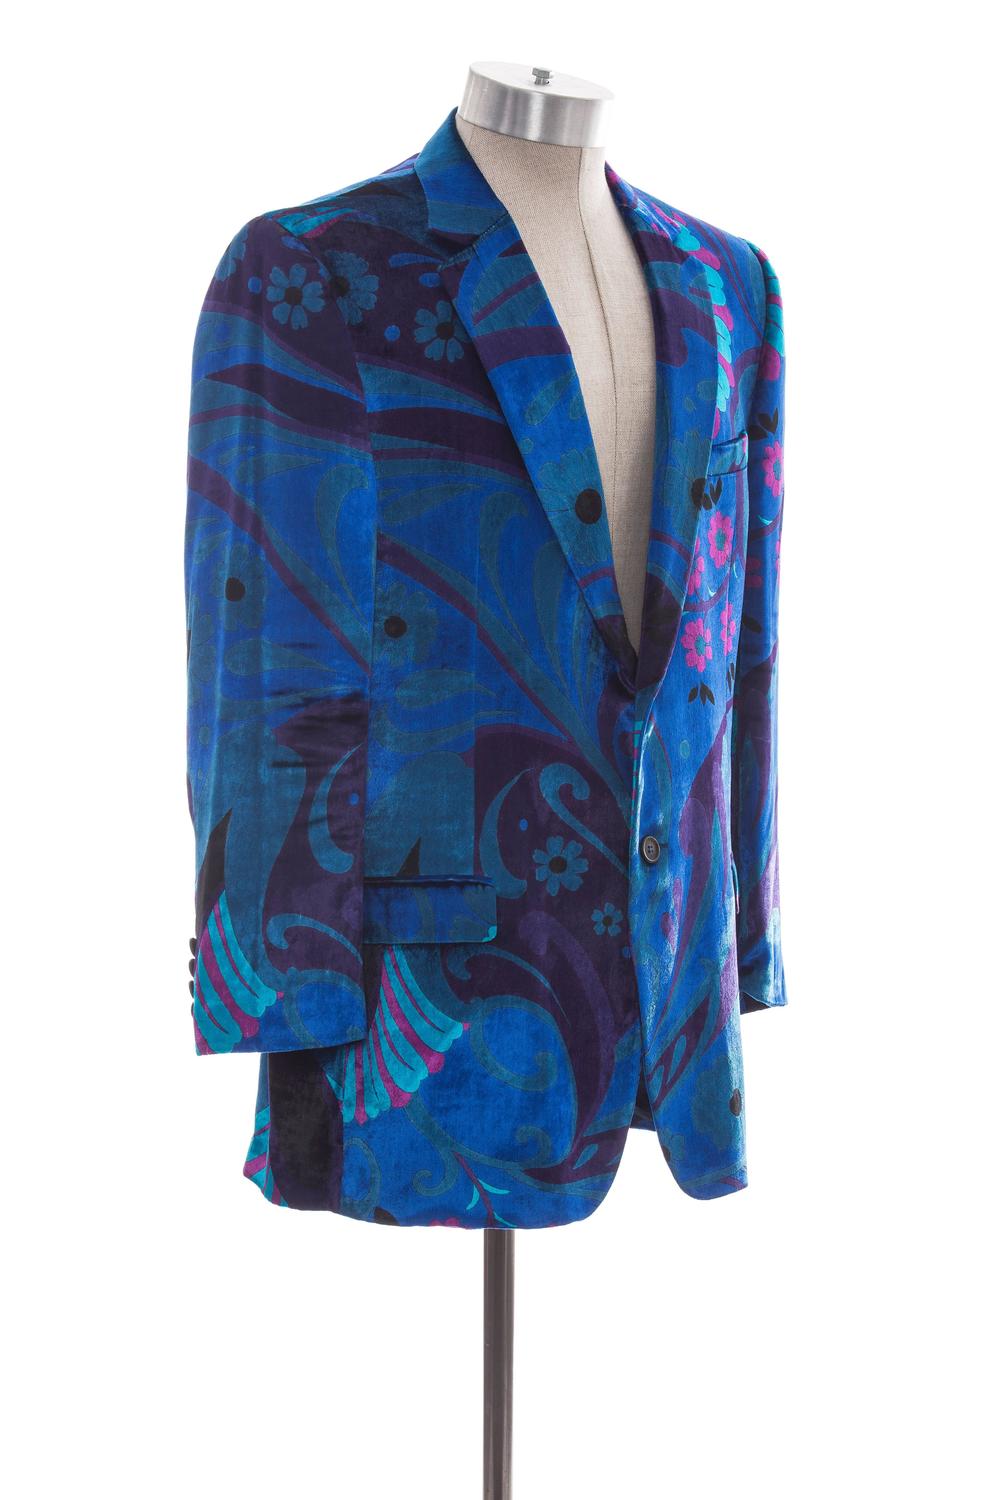 Gucci By Tom Ford Men's Floral Silk Velvet Blazer, Circa 1994 at 1stdibs